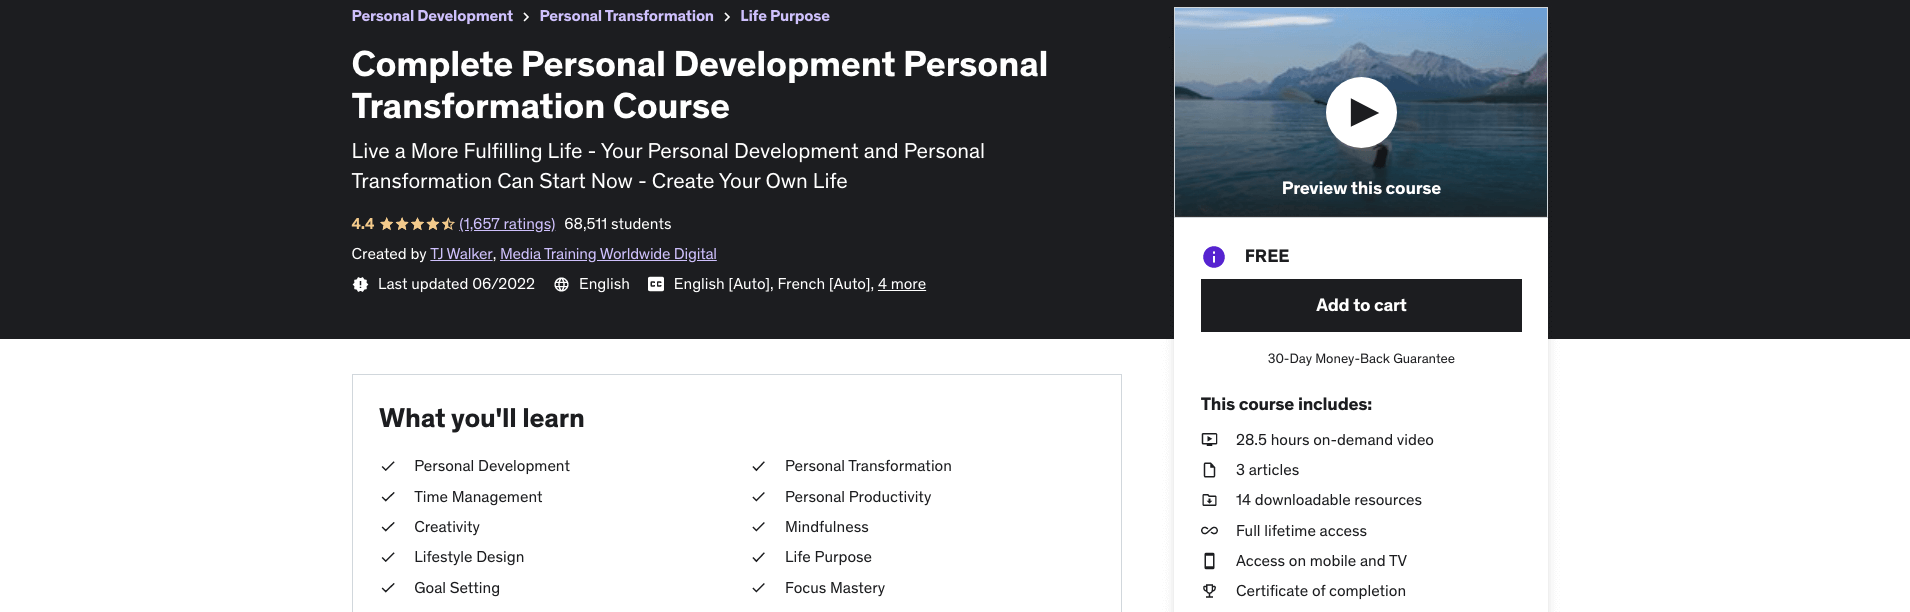 Complete Personal Development Personal Transformation Course